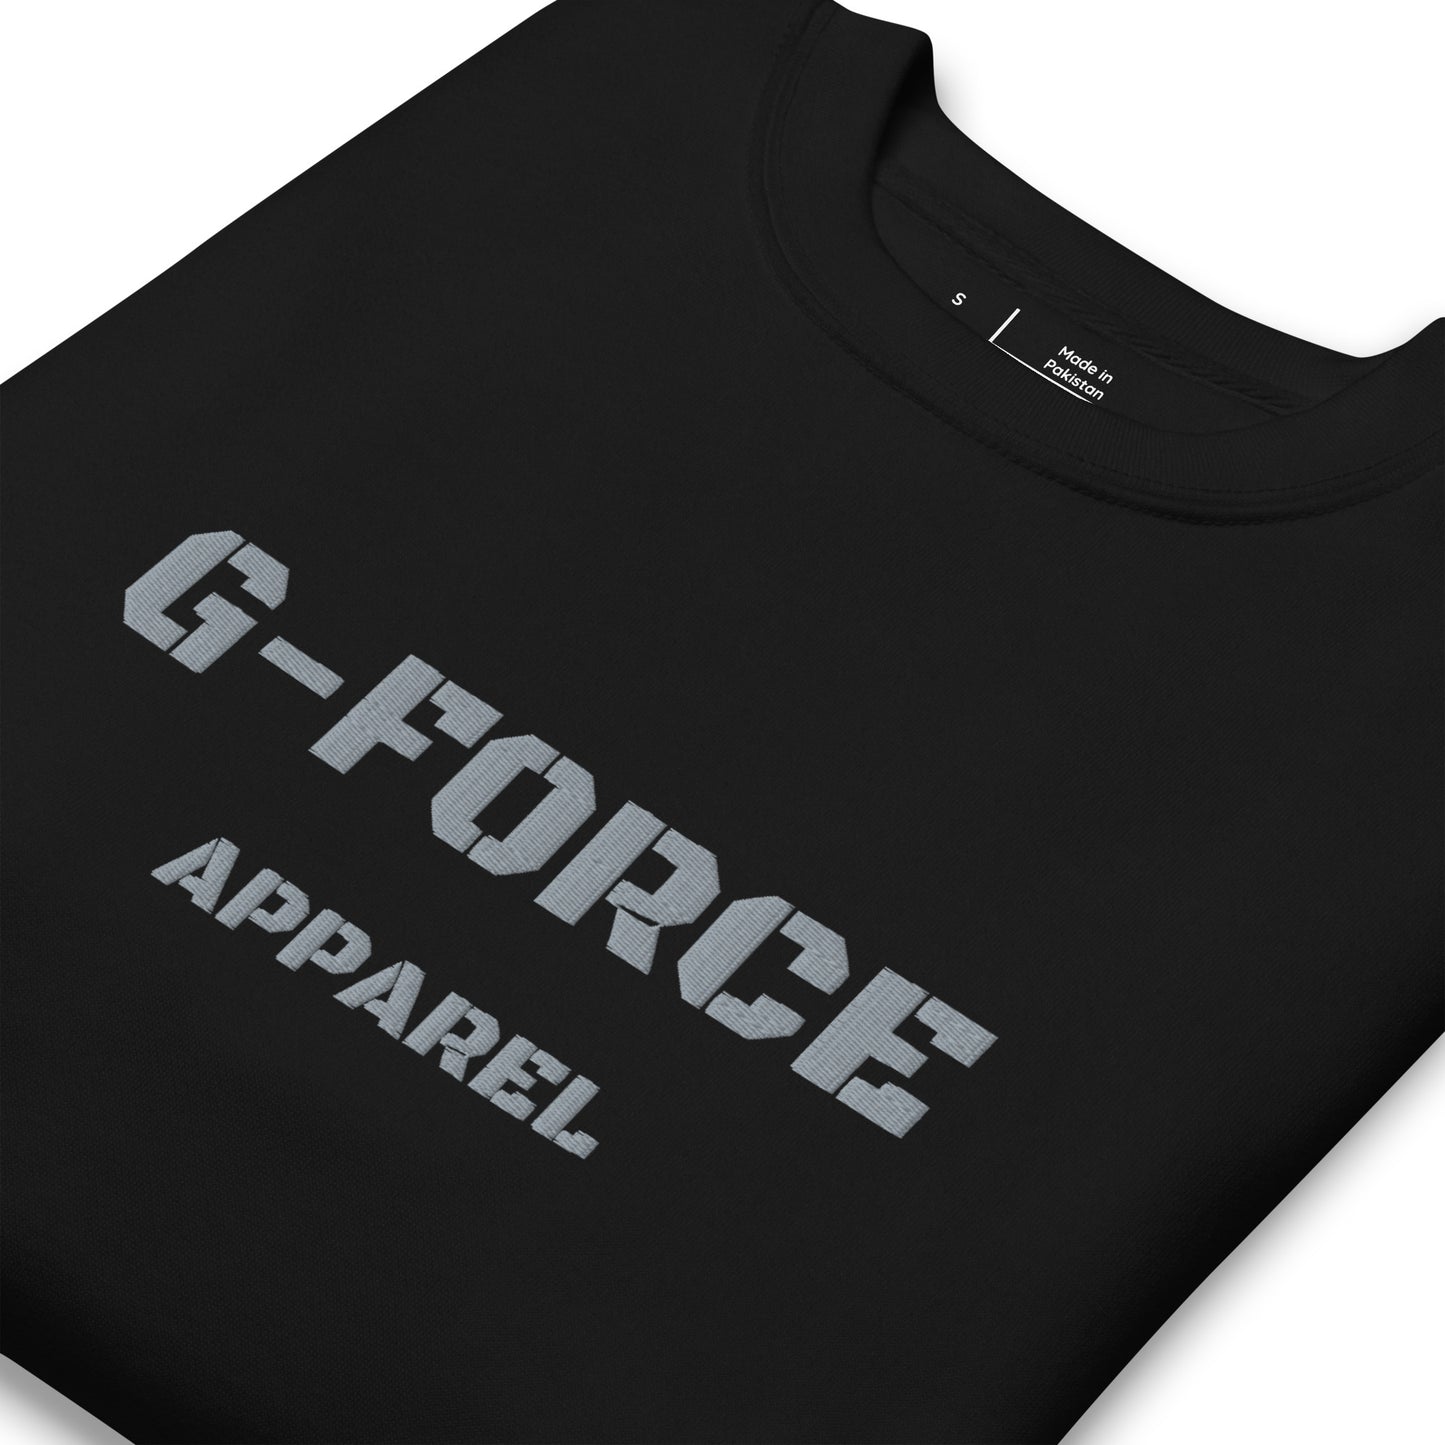 G-FORCE Apparel Premium Sweatshirt